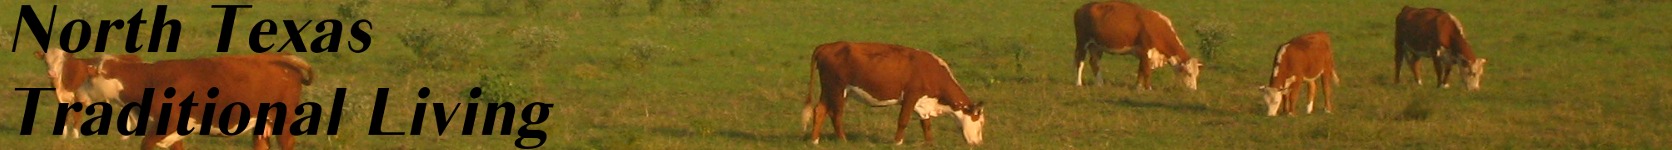 TX cattle